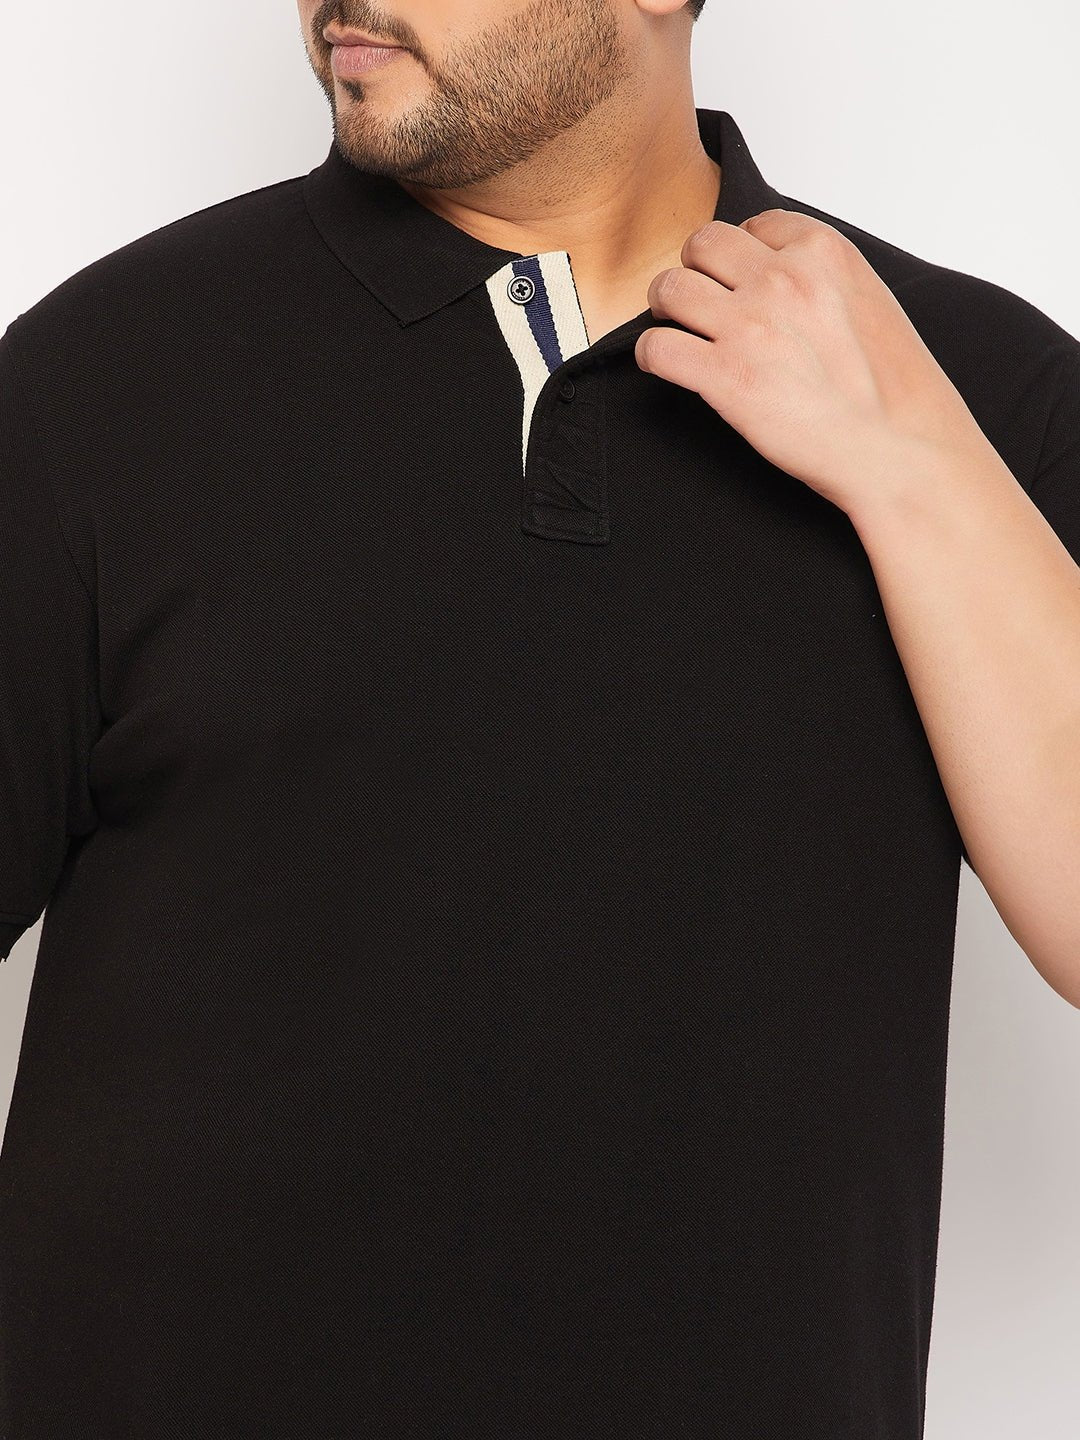 Plus Size Black Polo T-Shirt - clubyork